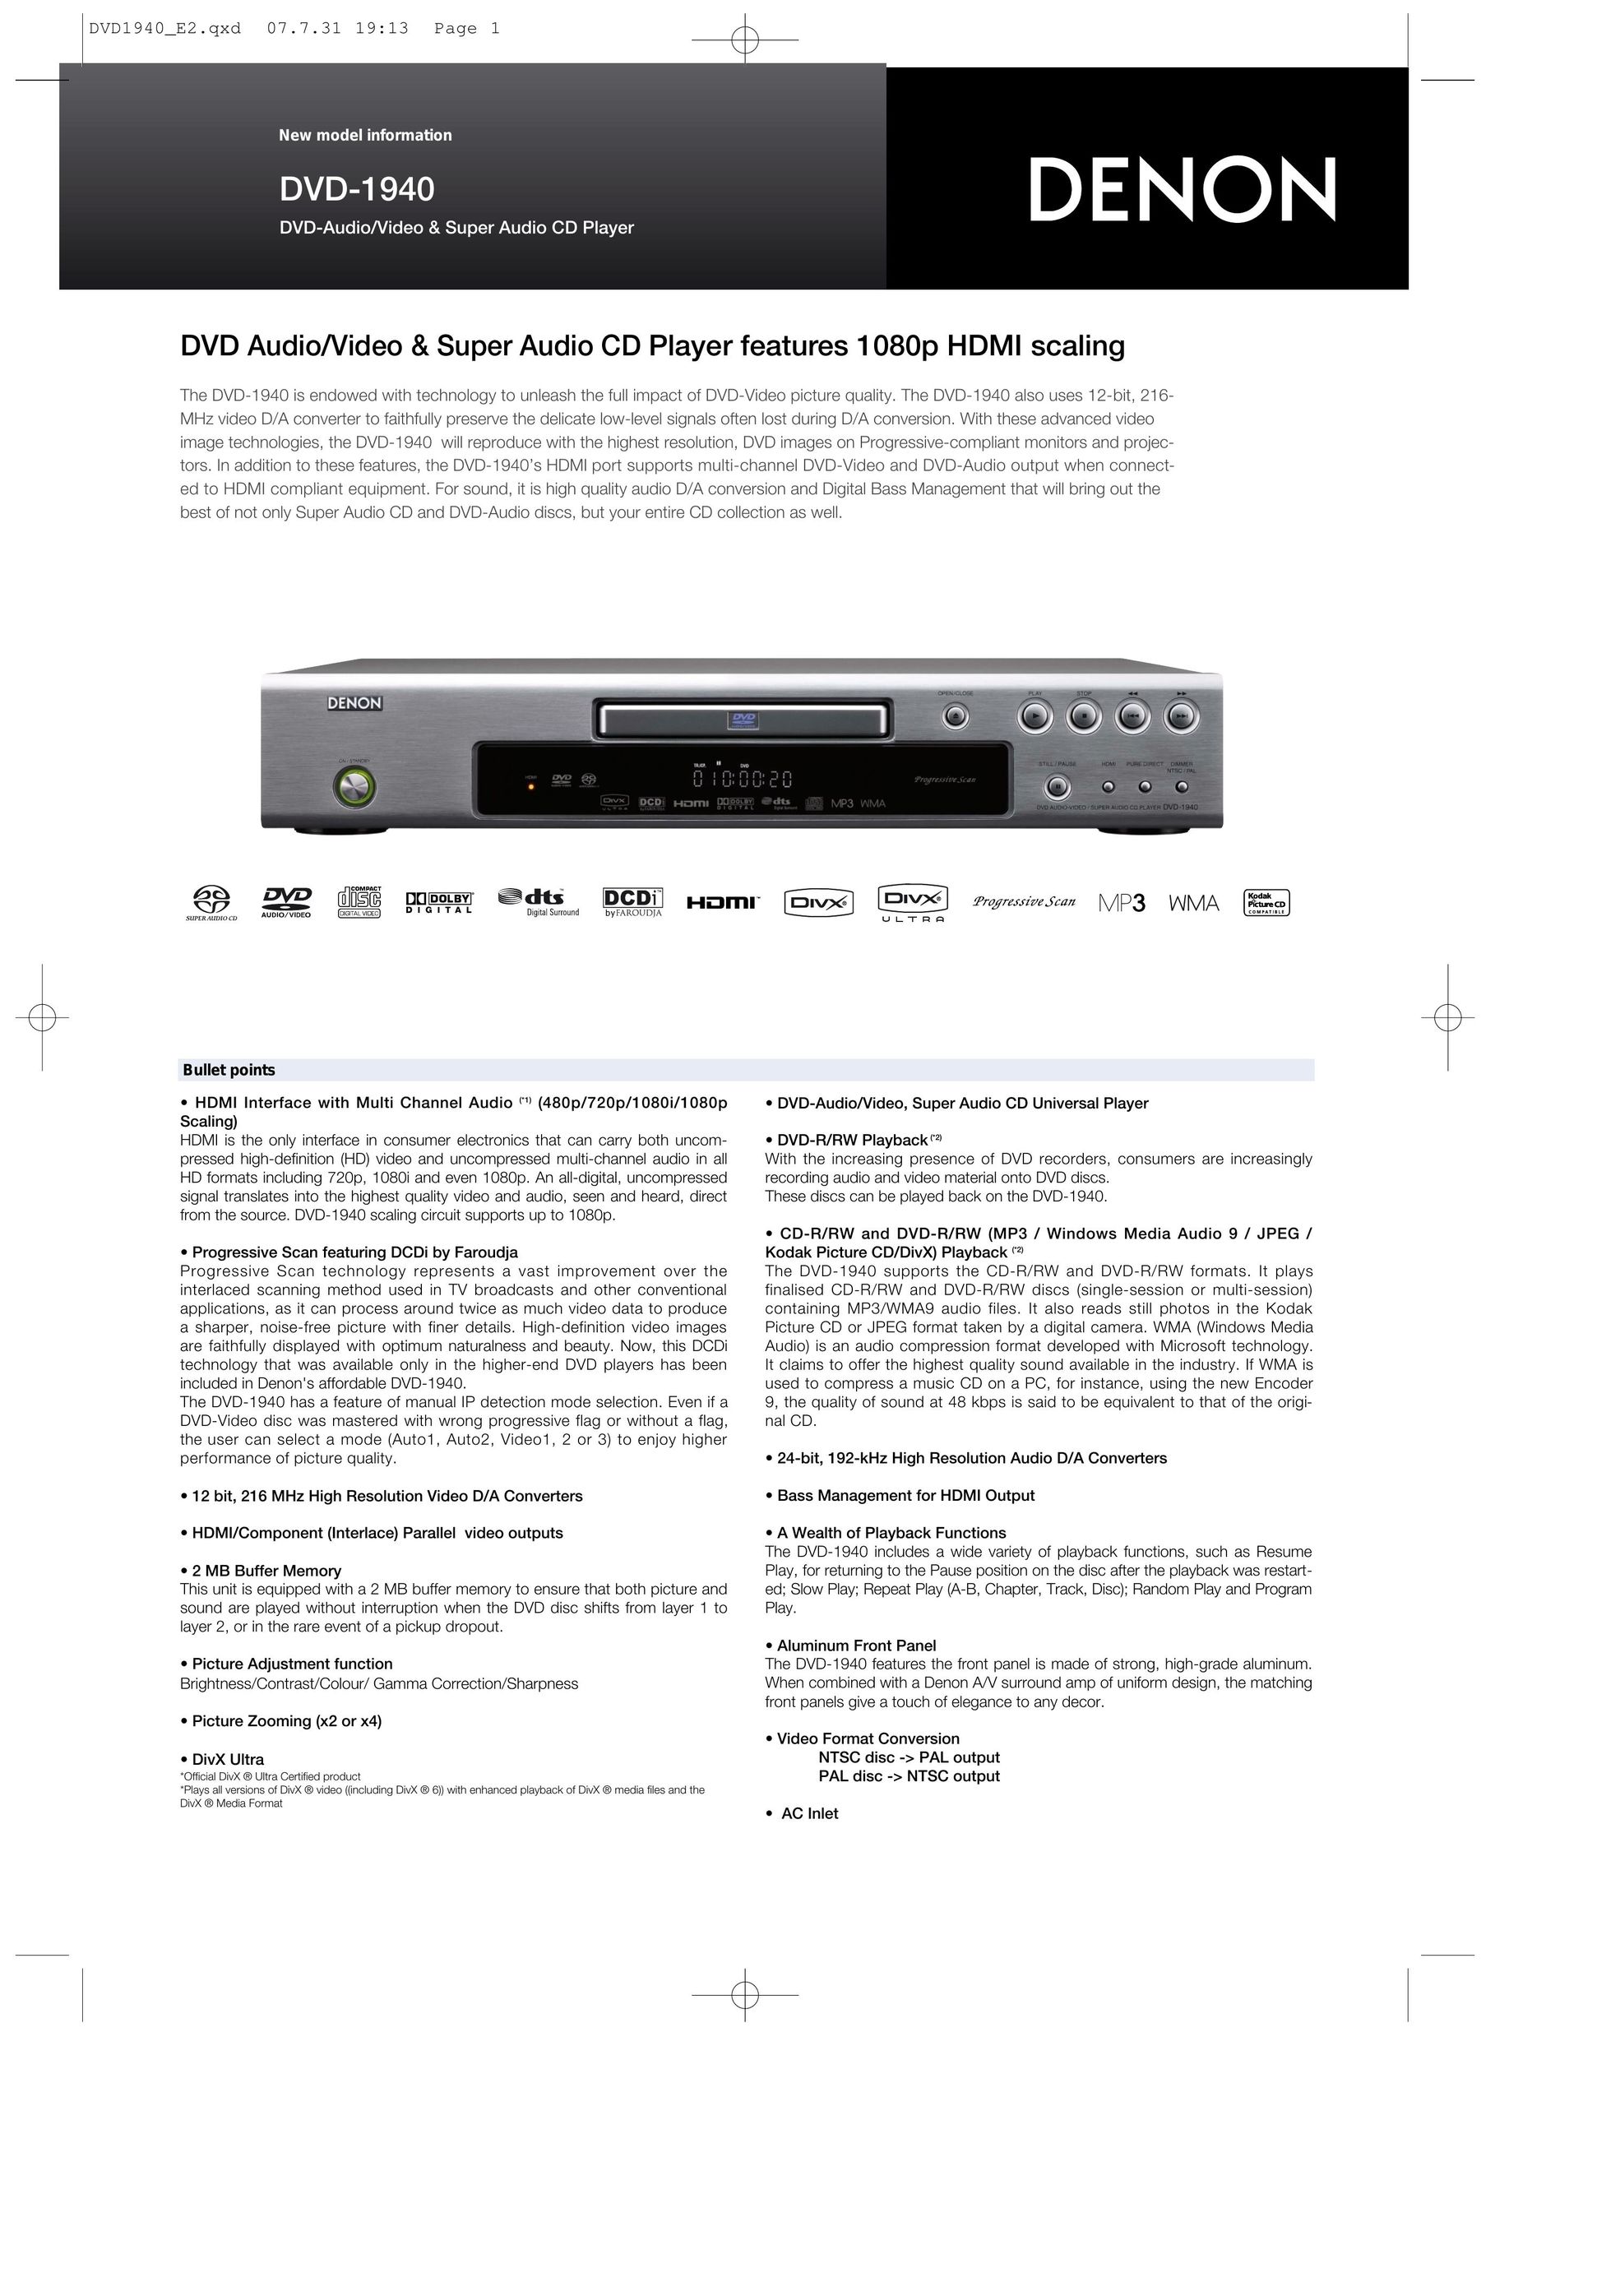 Denon DVD-1940 DVD Player User Manual